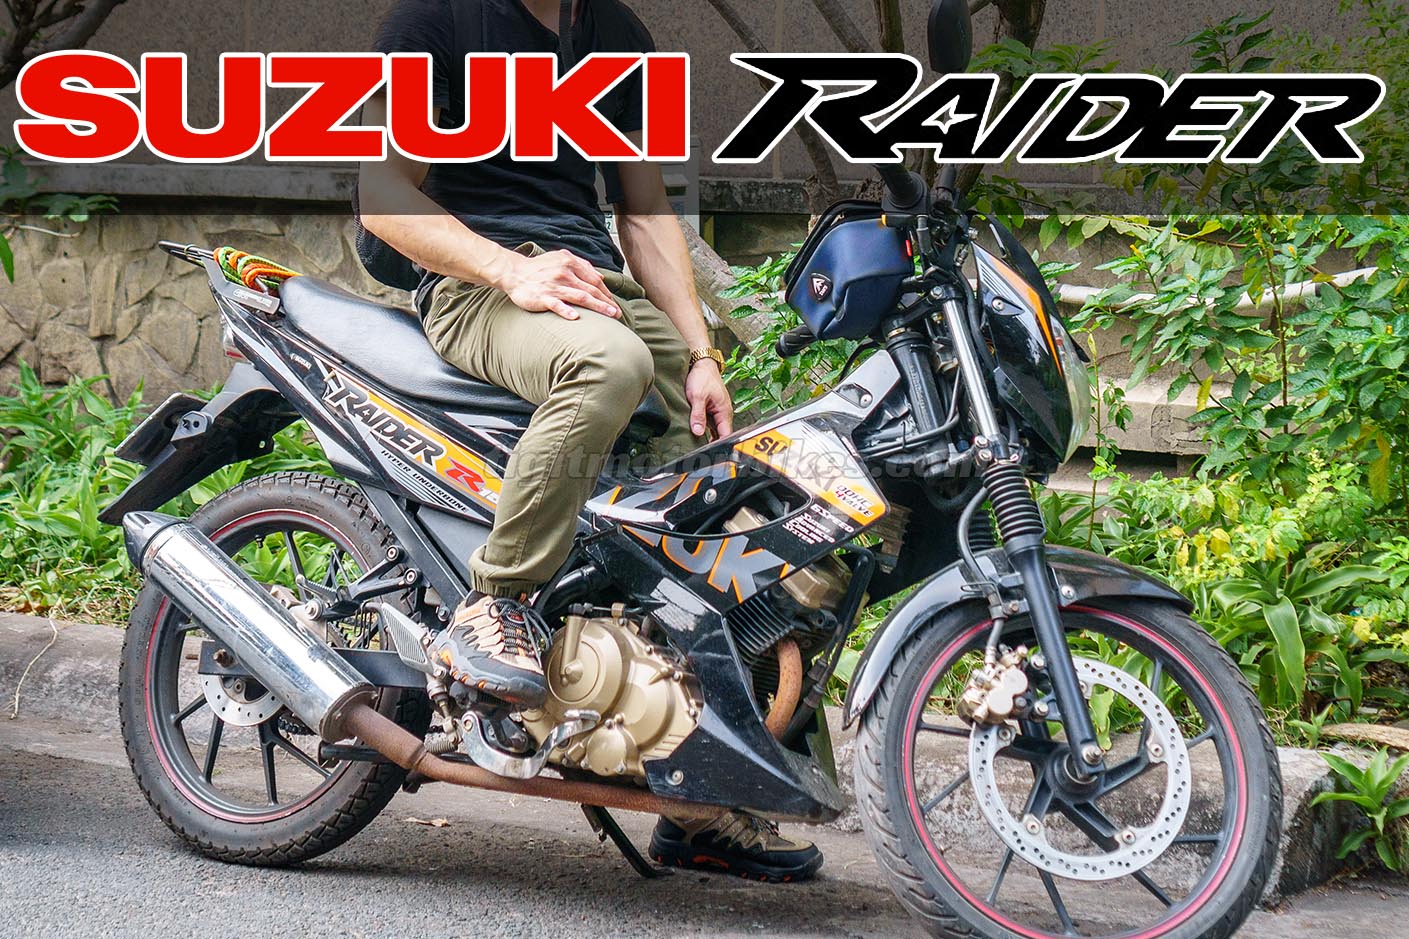 Suzuki Raider 150 Fi 2019 Philippines - Brisia Blog